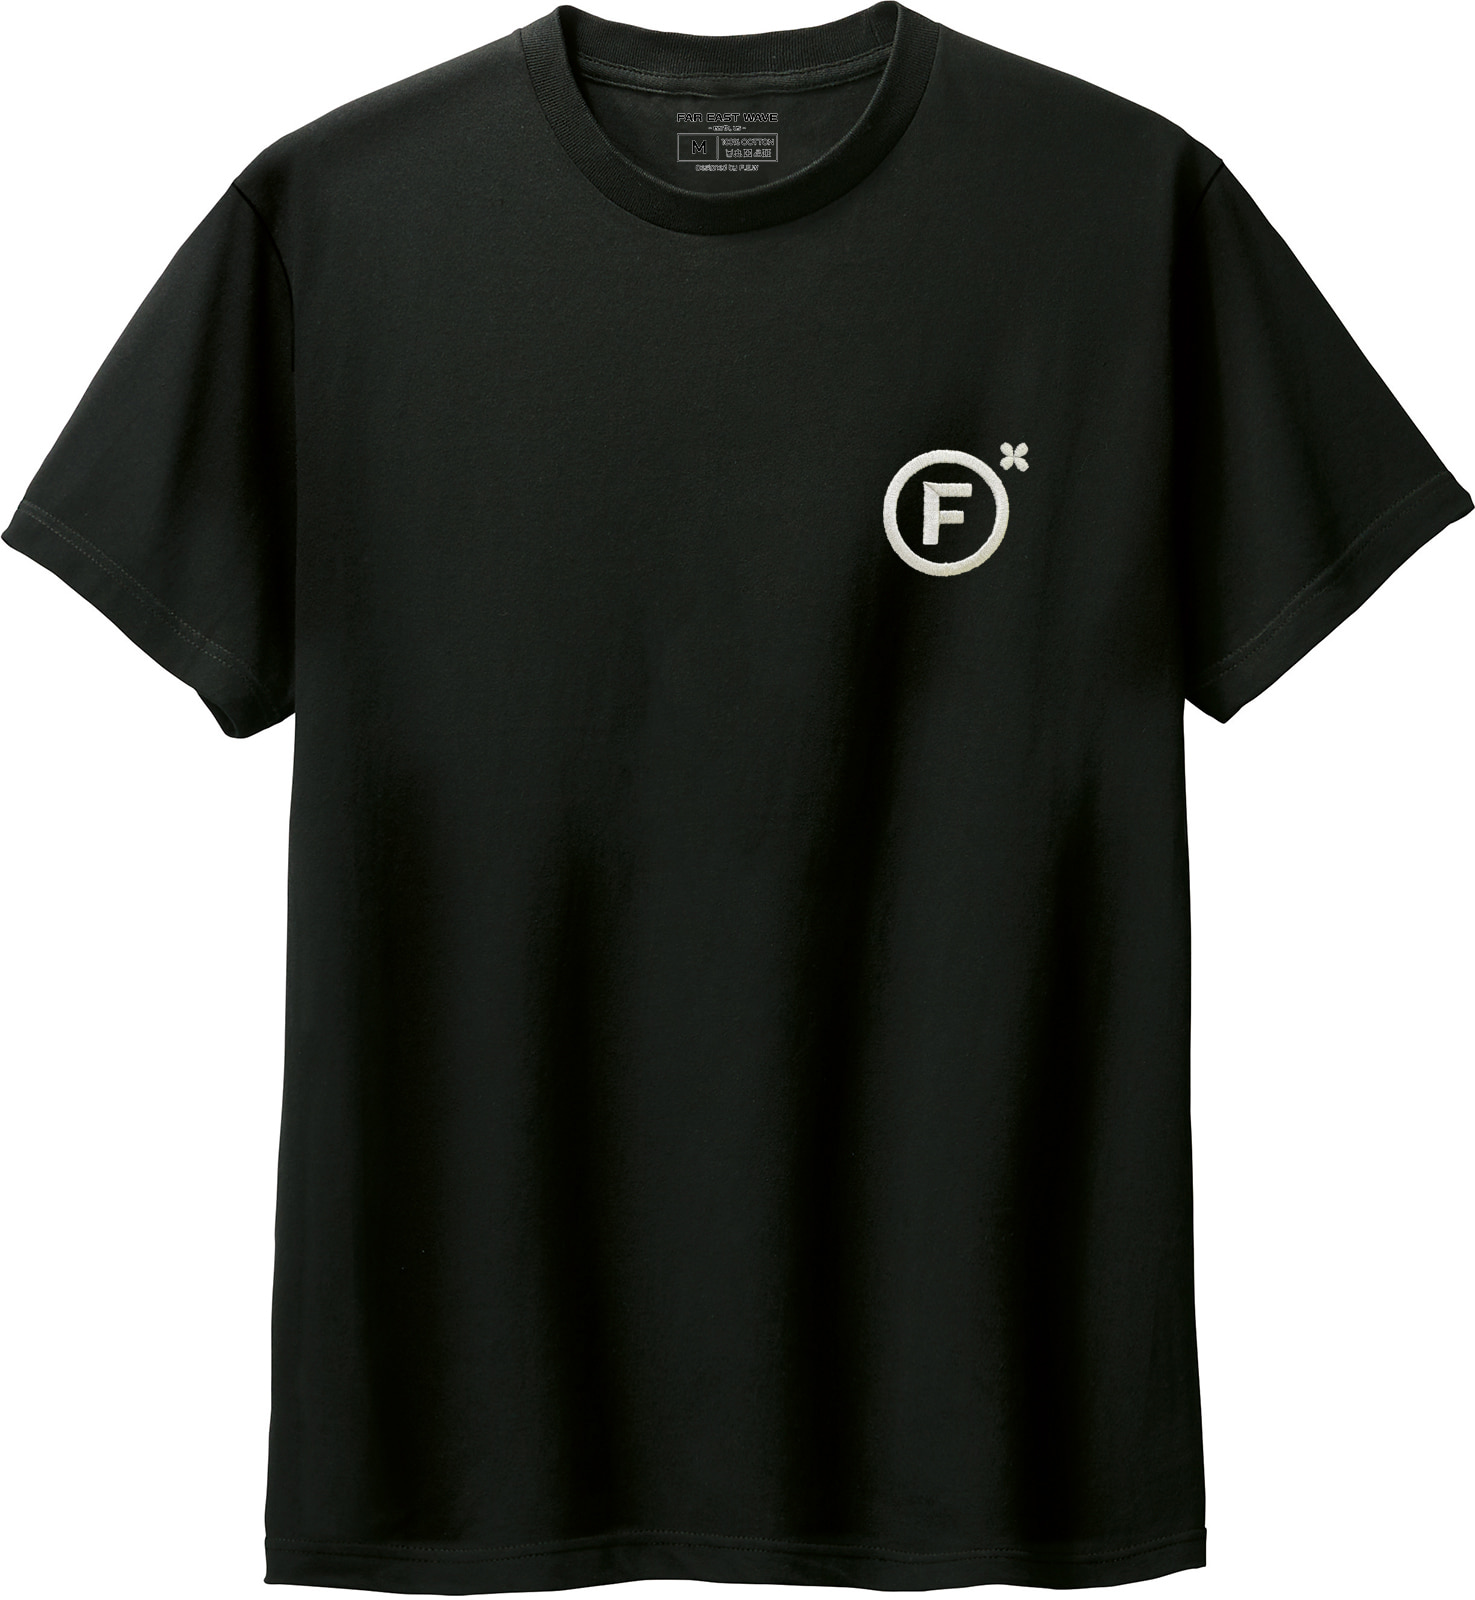 Circle logo T-shirt(black)